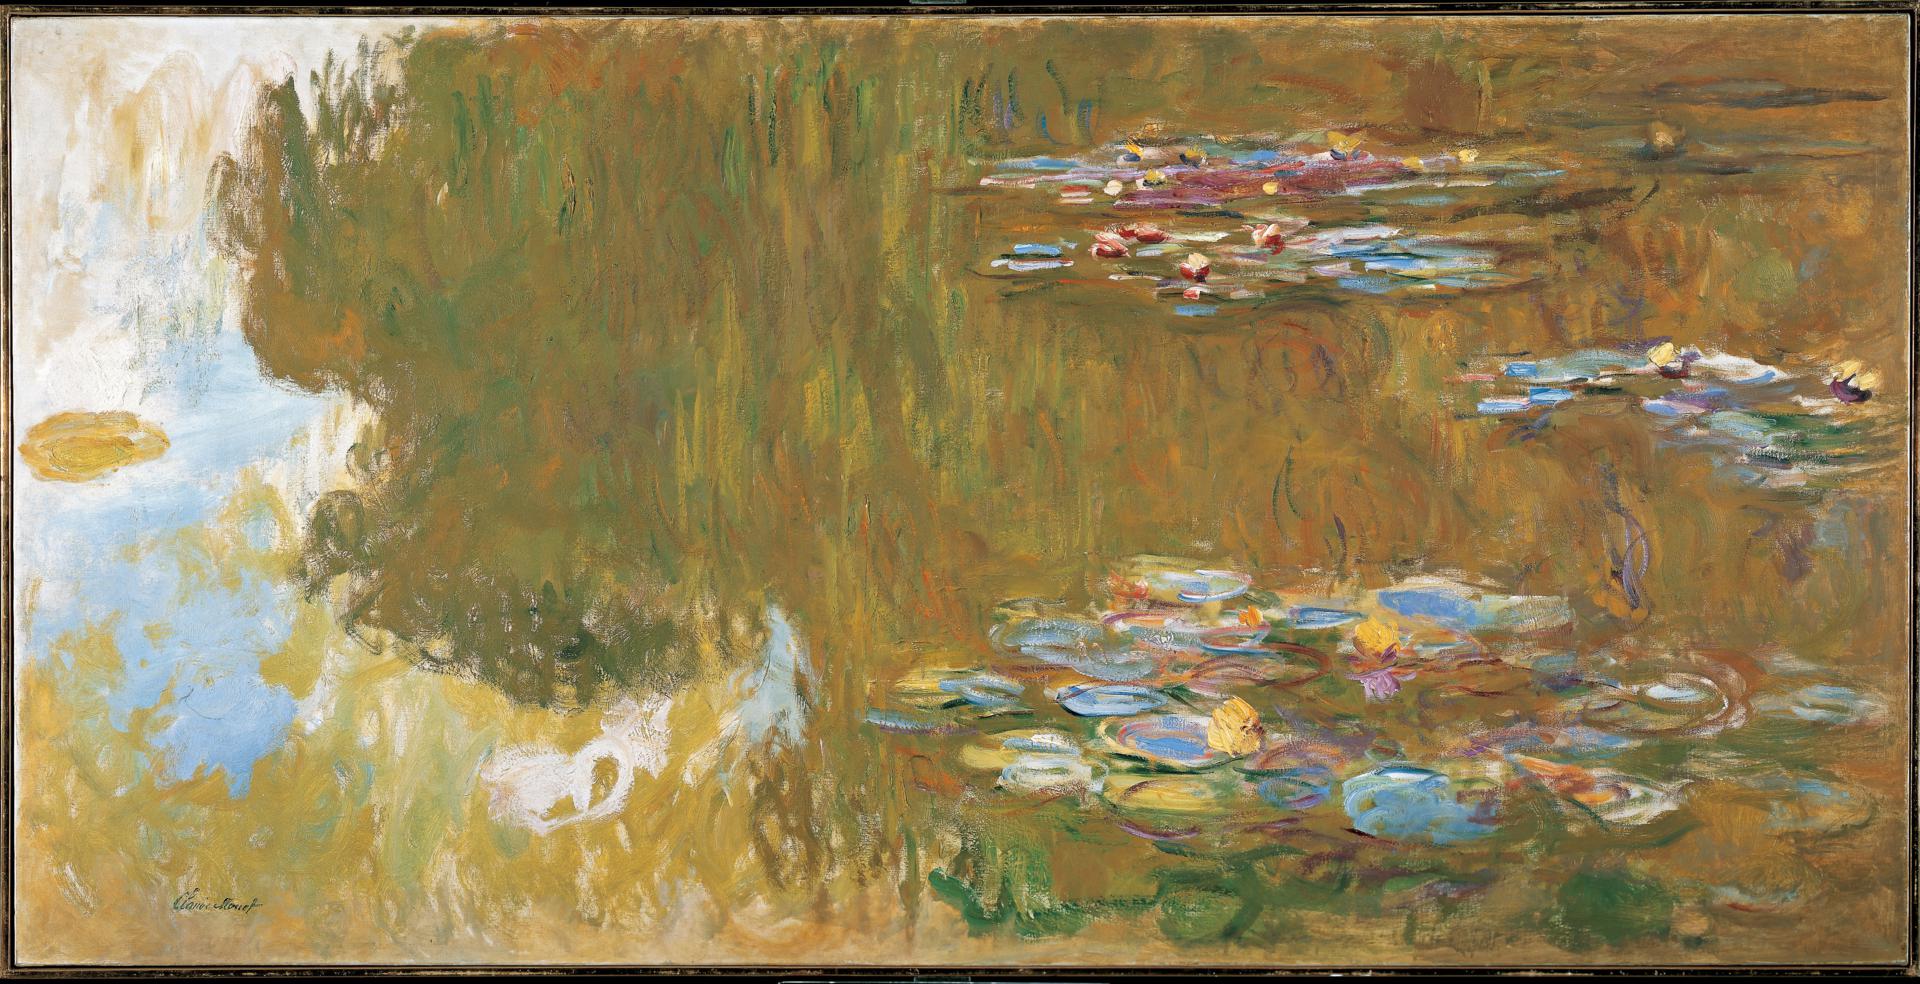 0107_莫奈_Claude Monet 1840–1926-The Water Lily Pond c 1917-19_6854x3513PX_TIF_97DPI_70_0